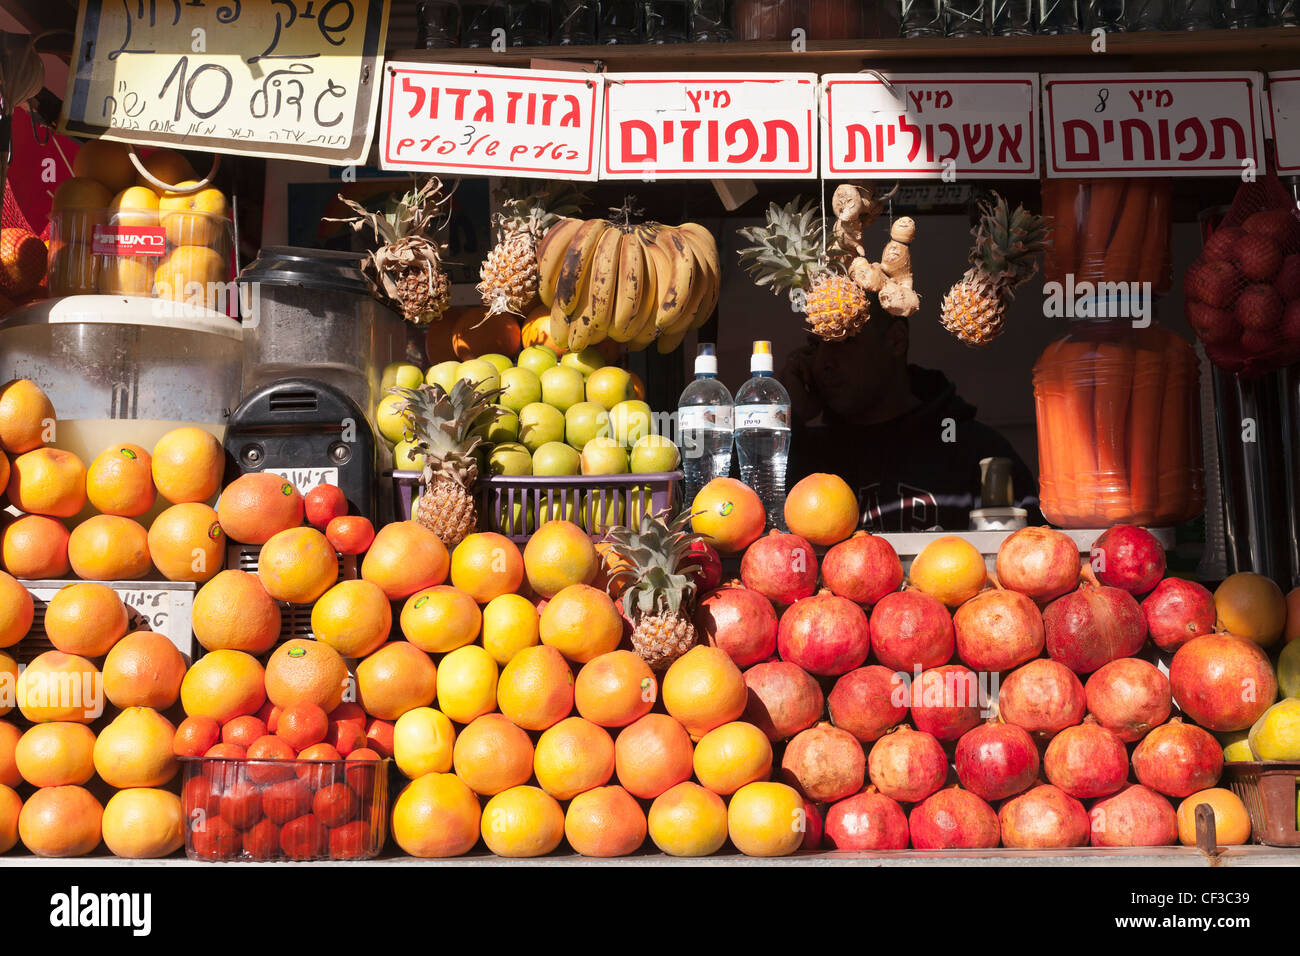 Israel,Tel Aviv, fruit on display at a vendors juice stand Stock Photo